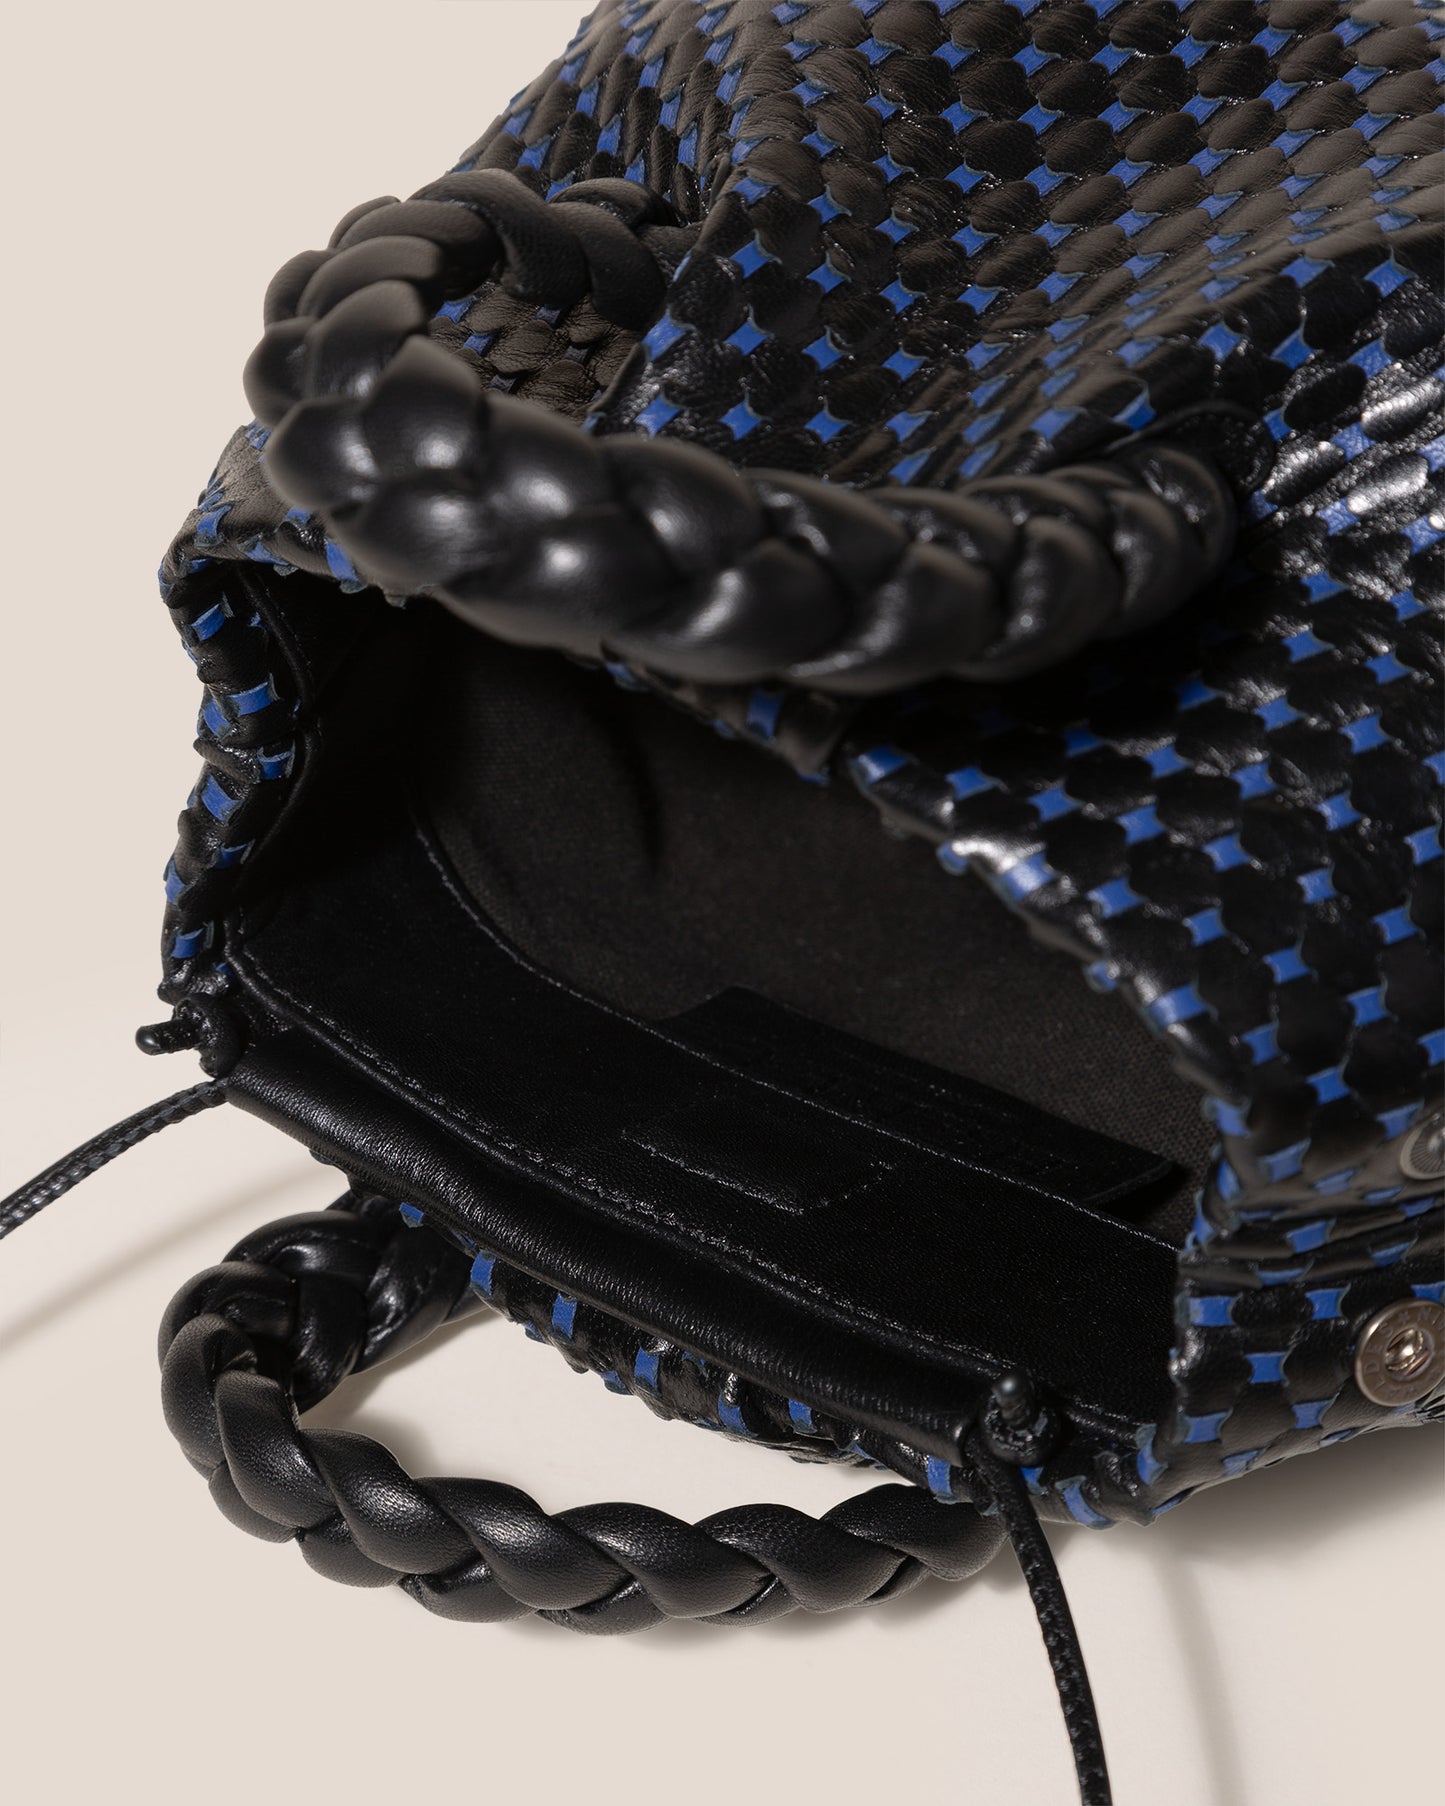 Beige Bombon braided-handle woven leather bag, Hereu